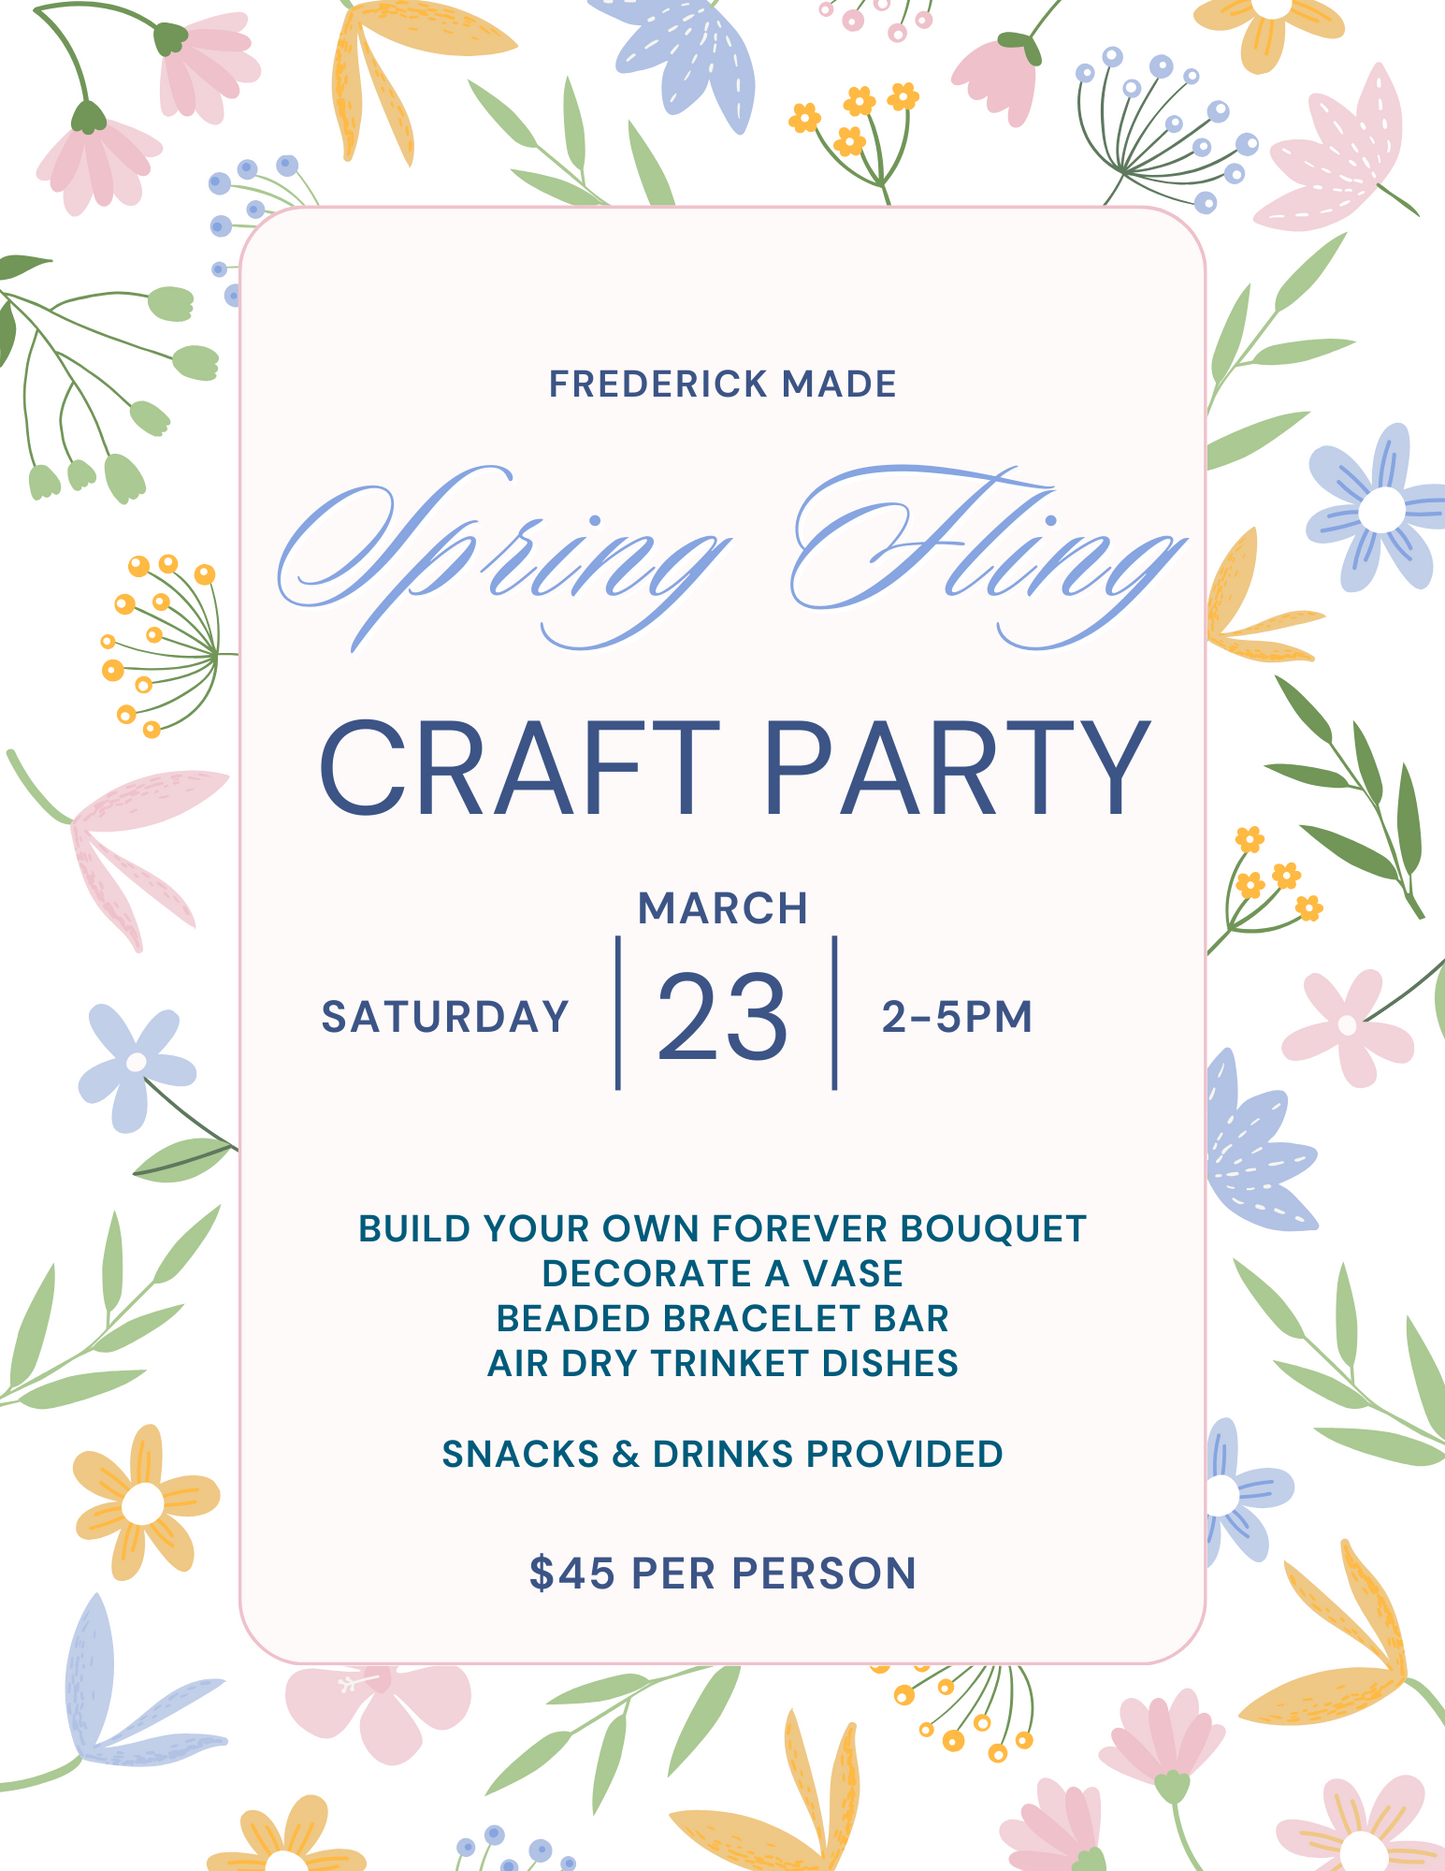 Spring Fling Craft Party